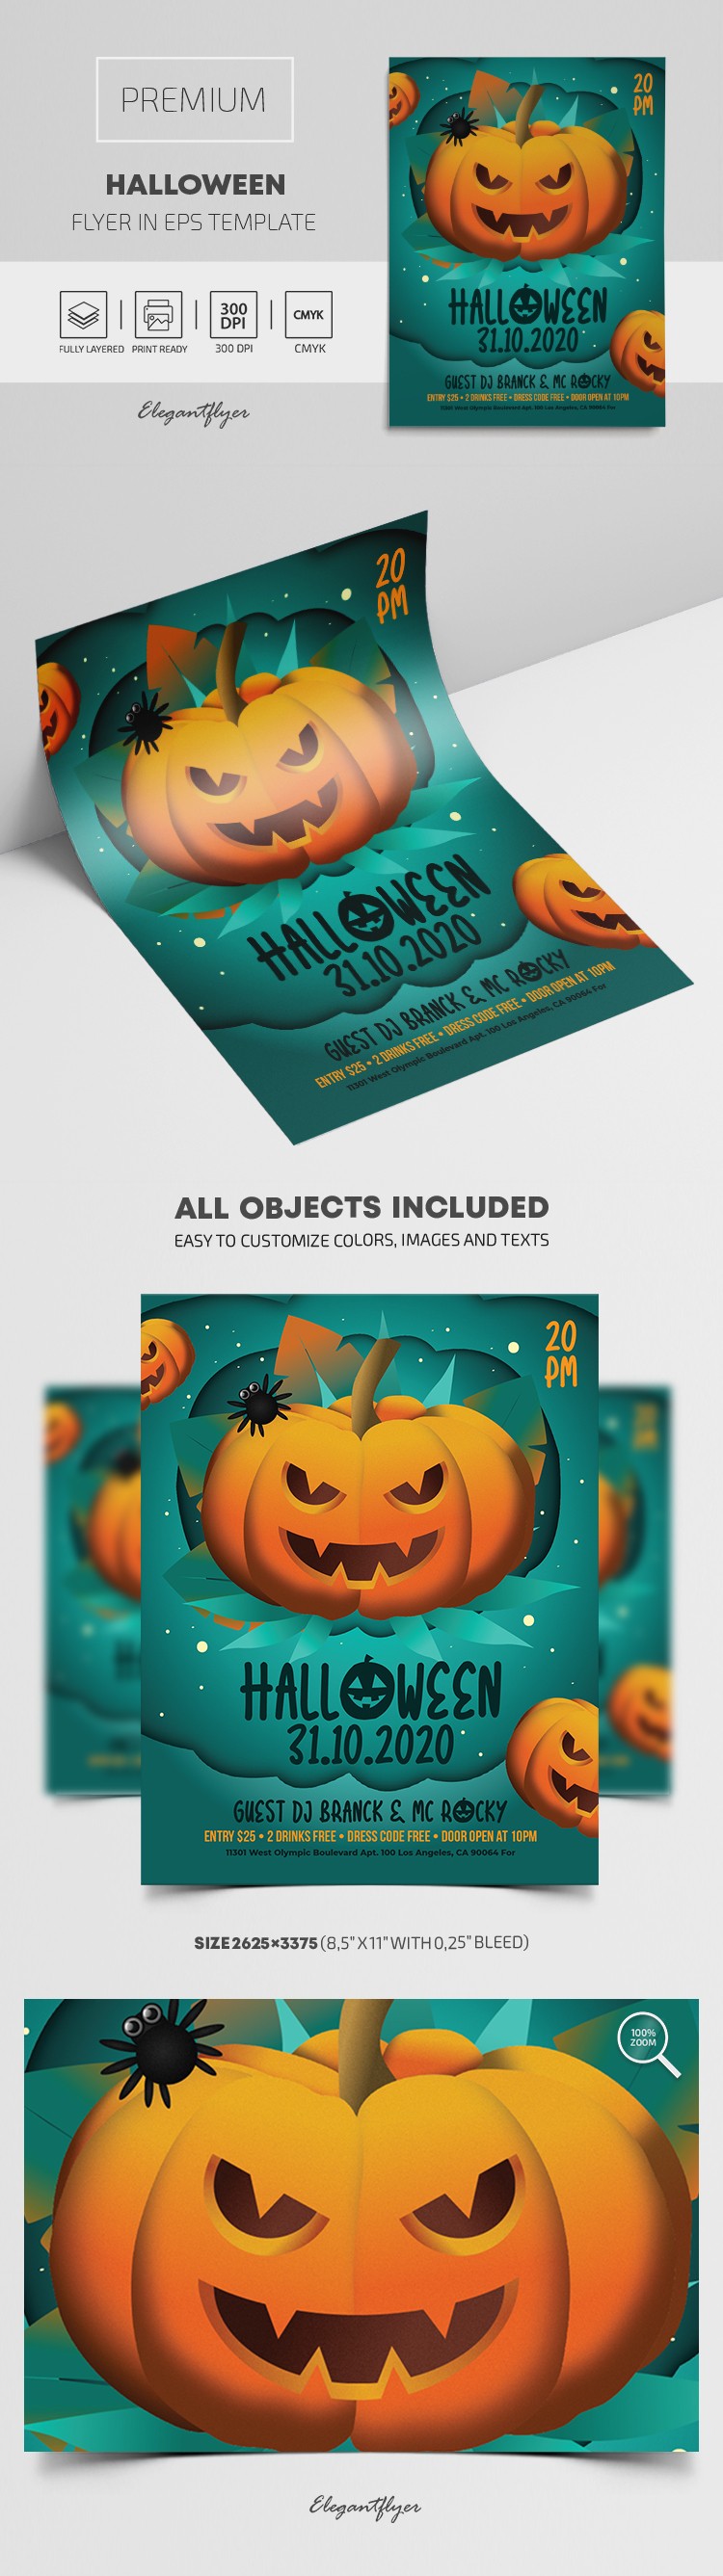 Halloween Vektor Flyer by ElegantFlyer